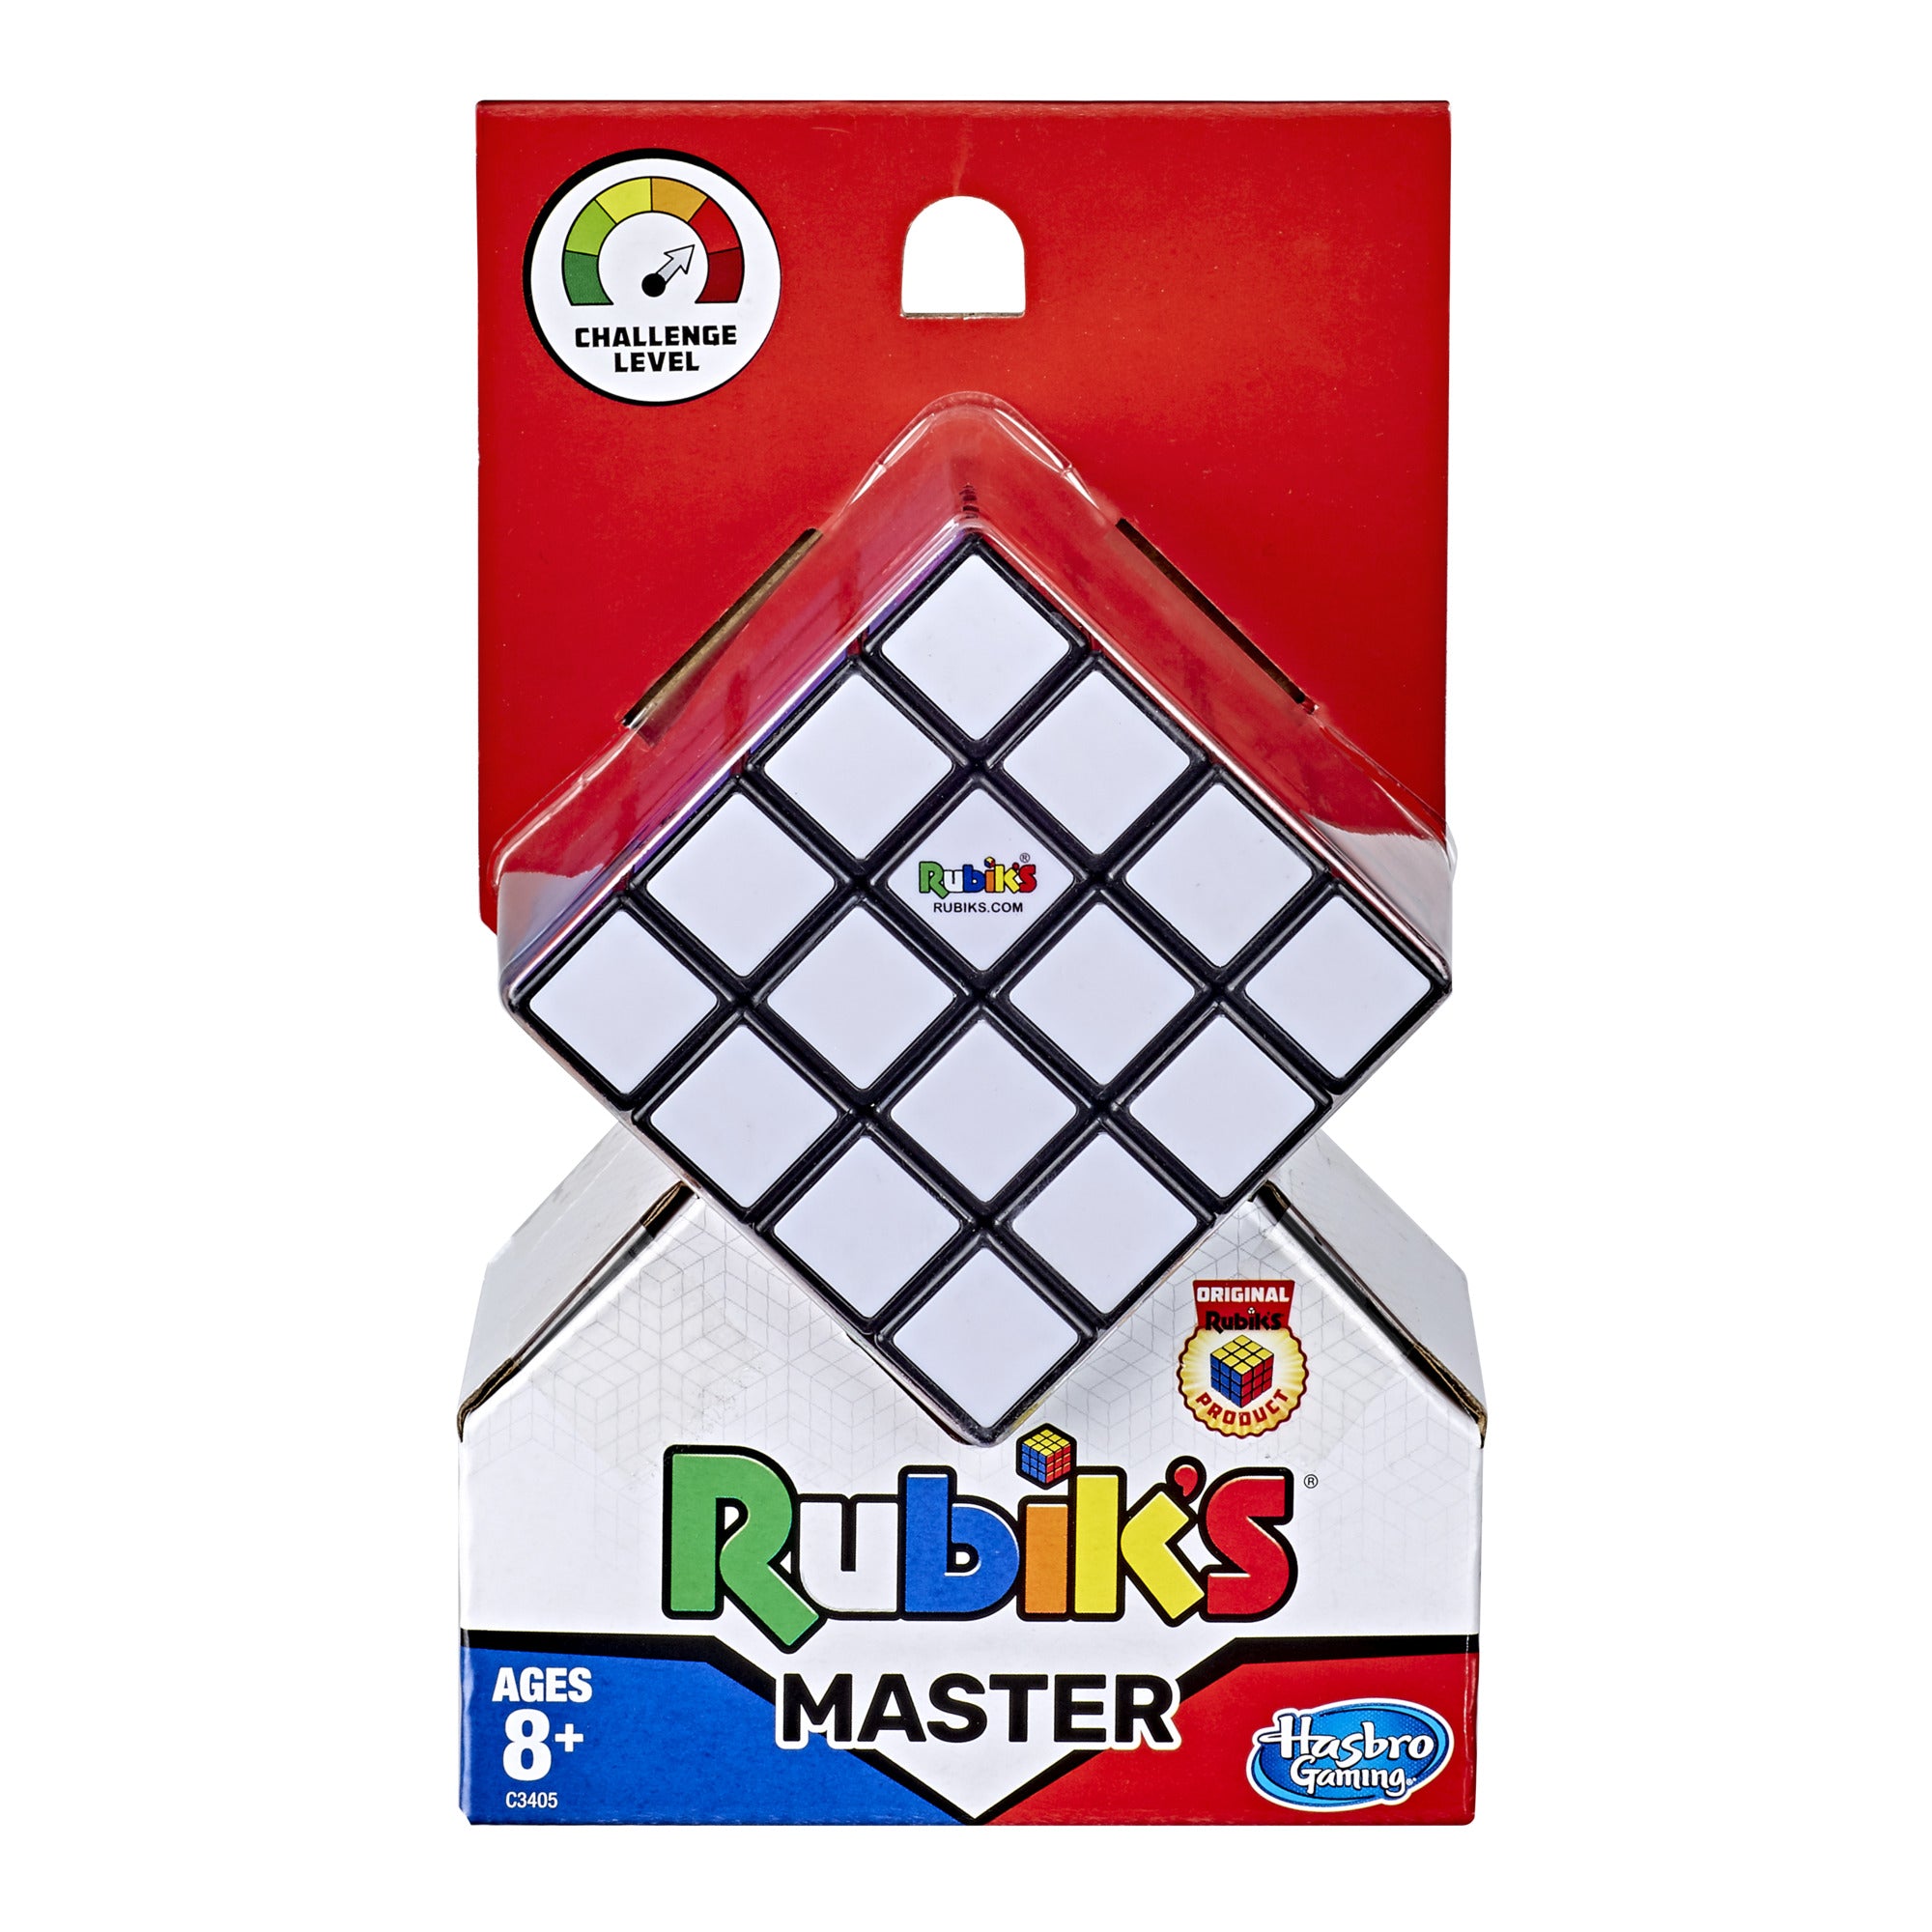 Rubik's Master 4x4 Cube